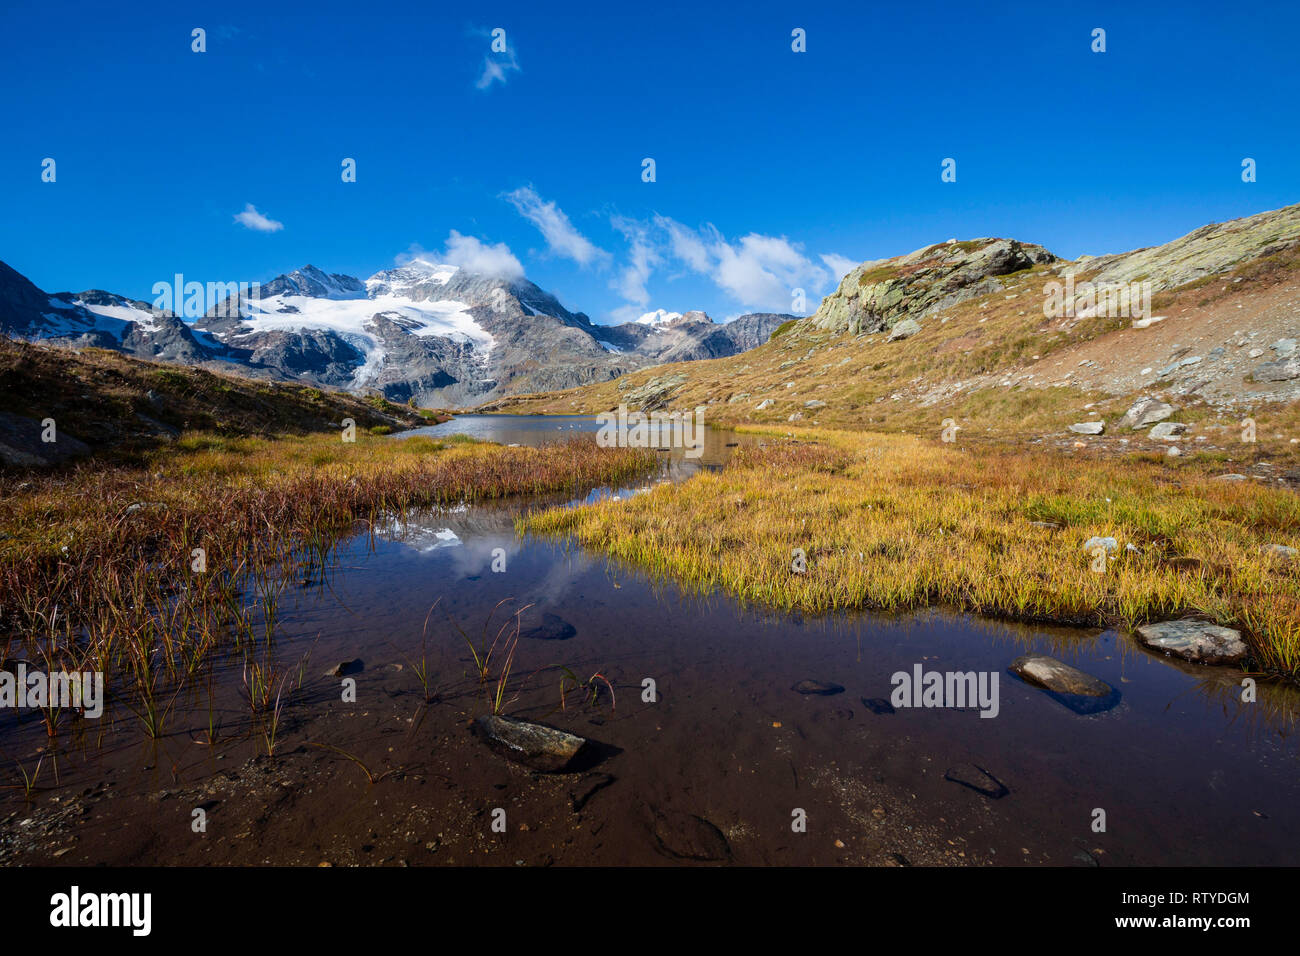 Alpinen See am Fuß des Piz Cambrena, Val Dal Bugliet, Berninapass, Kanton Graubünden, Engadin, Schweiz Stockfoto